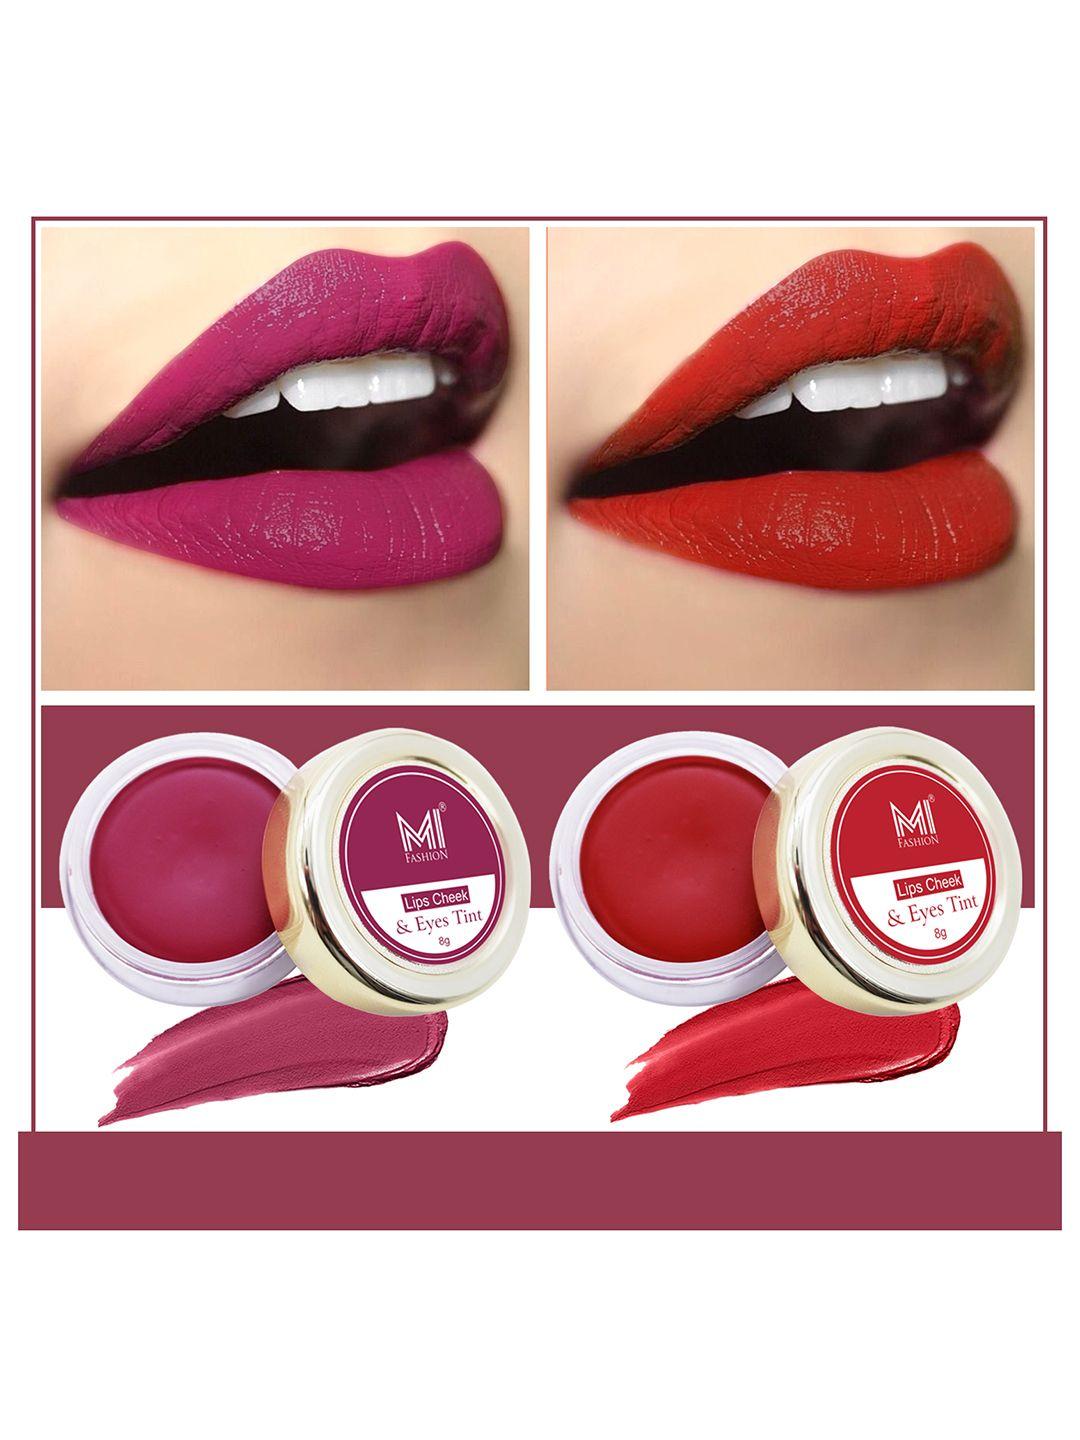 mi fashion set of 2 natural lips cheek & eyes tint 8g each- deep carmine pink red & red